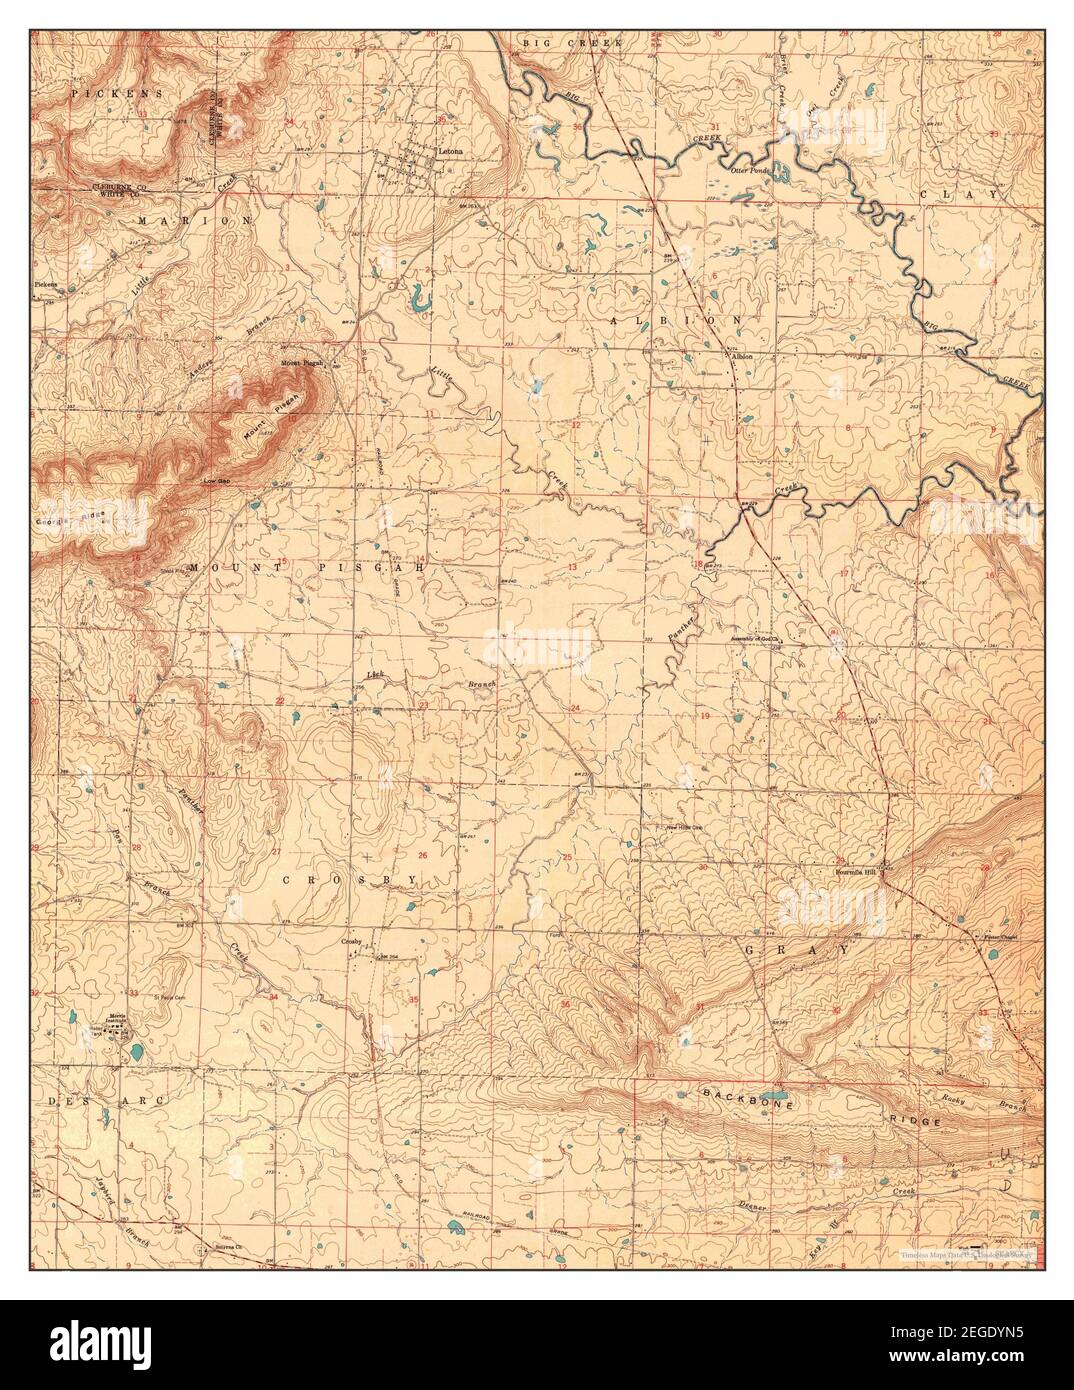 Letona, Arkansas, map 1962, 1:24000, United States of America by Timeless Maps, data U.S. Geological Survey Stock Photo